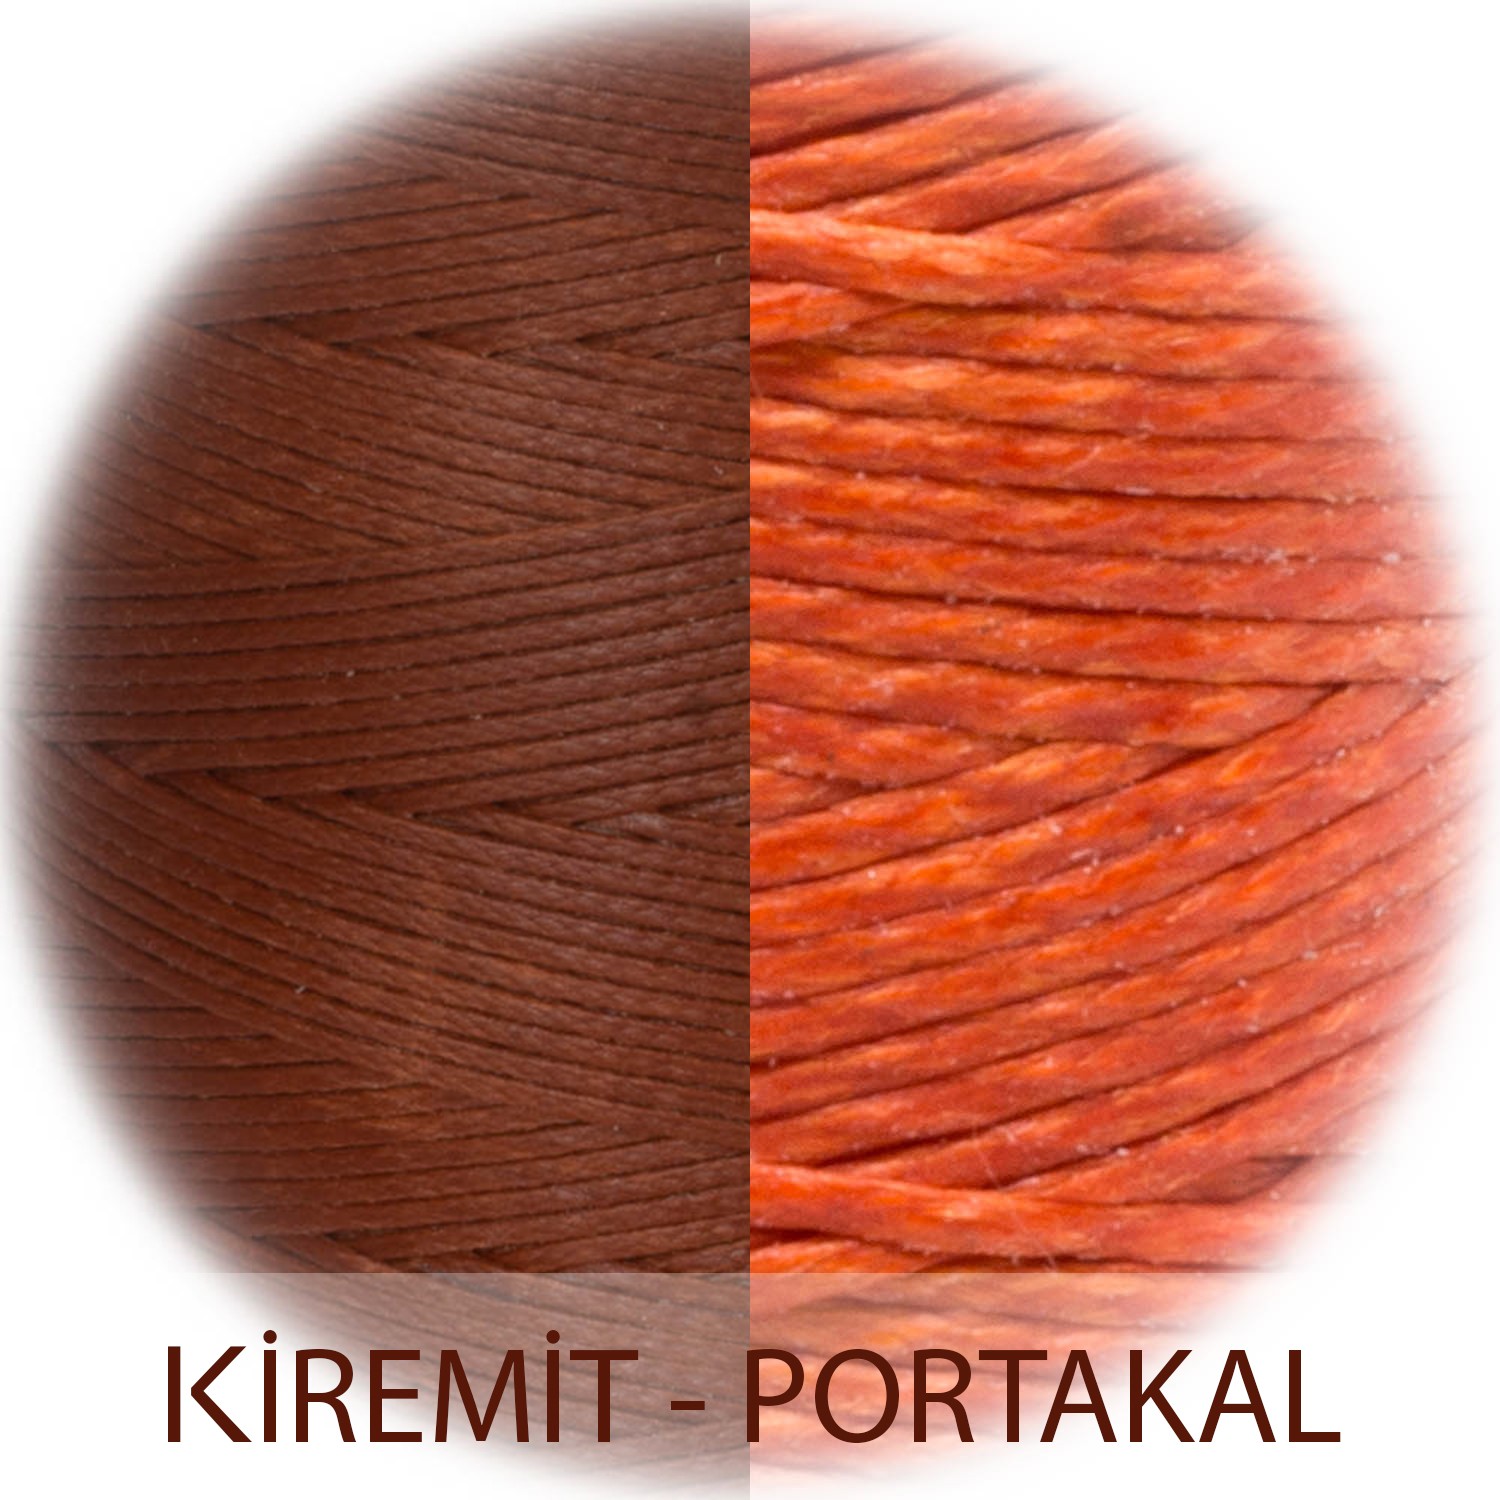 Kiremit-Portakal